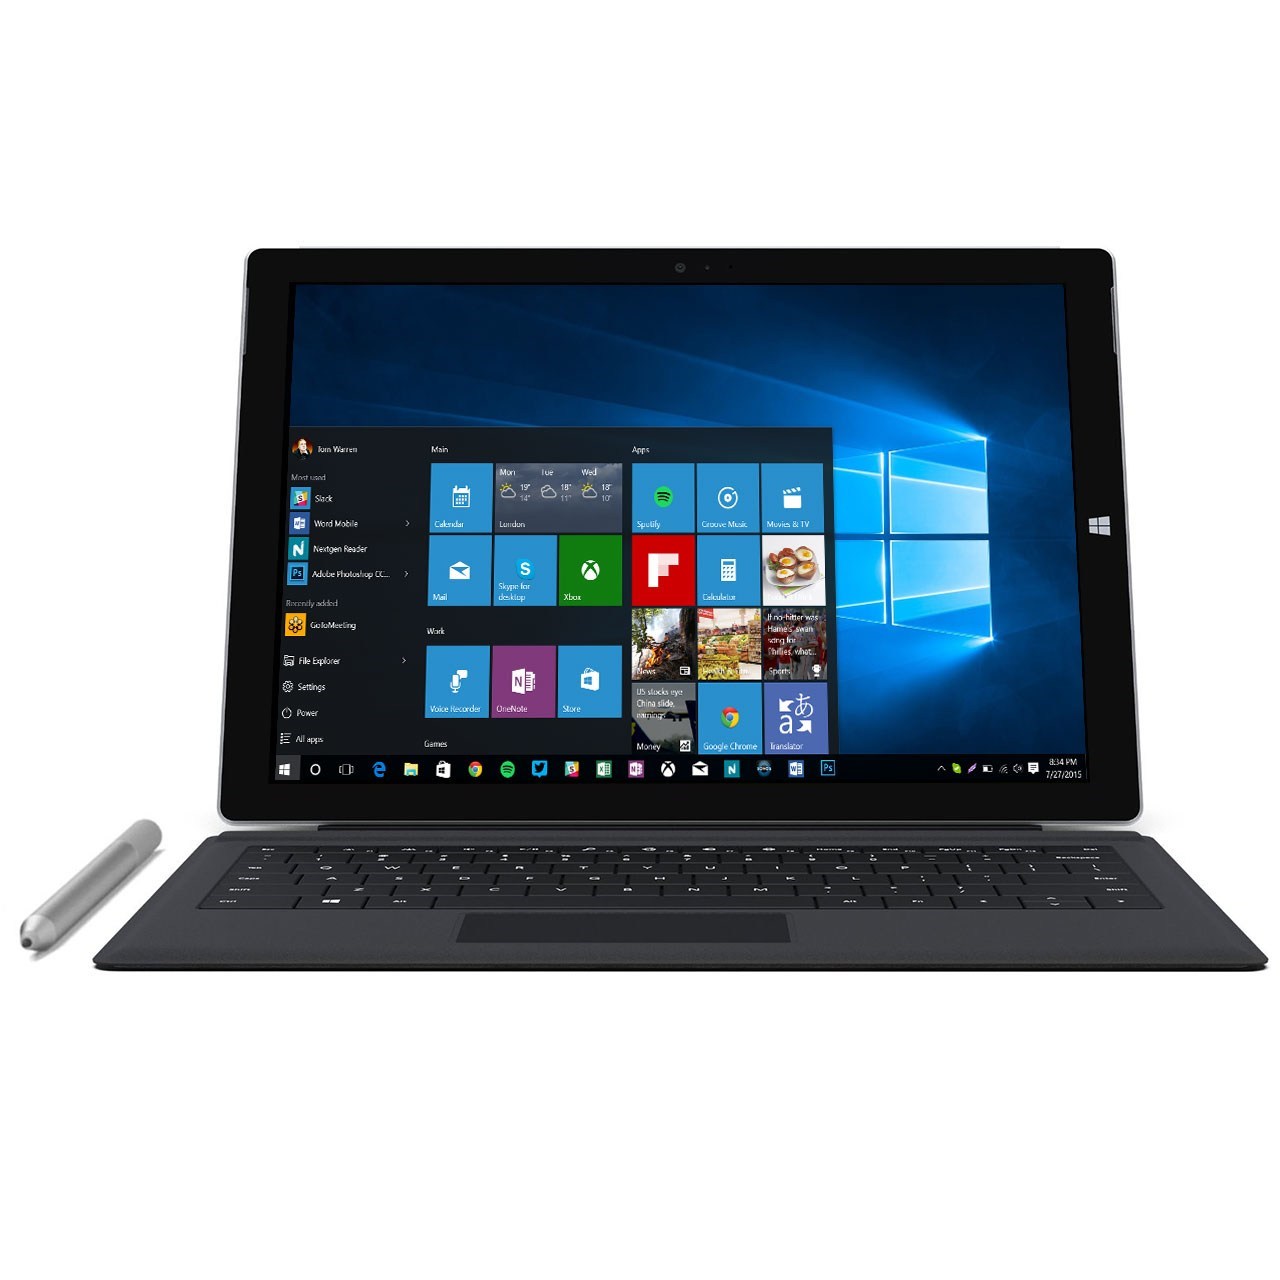 تبلت مایکروسافت مدل Surface Pro 3 - B به همراه کیبورد ظرفیت 64 گیگابایت